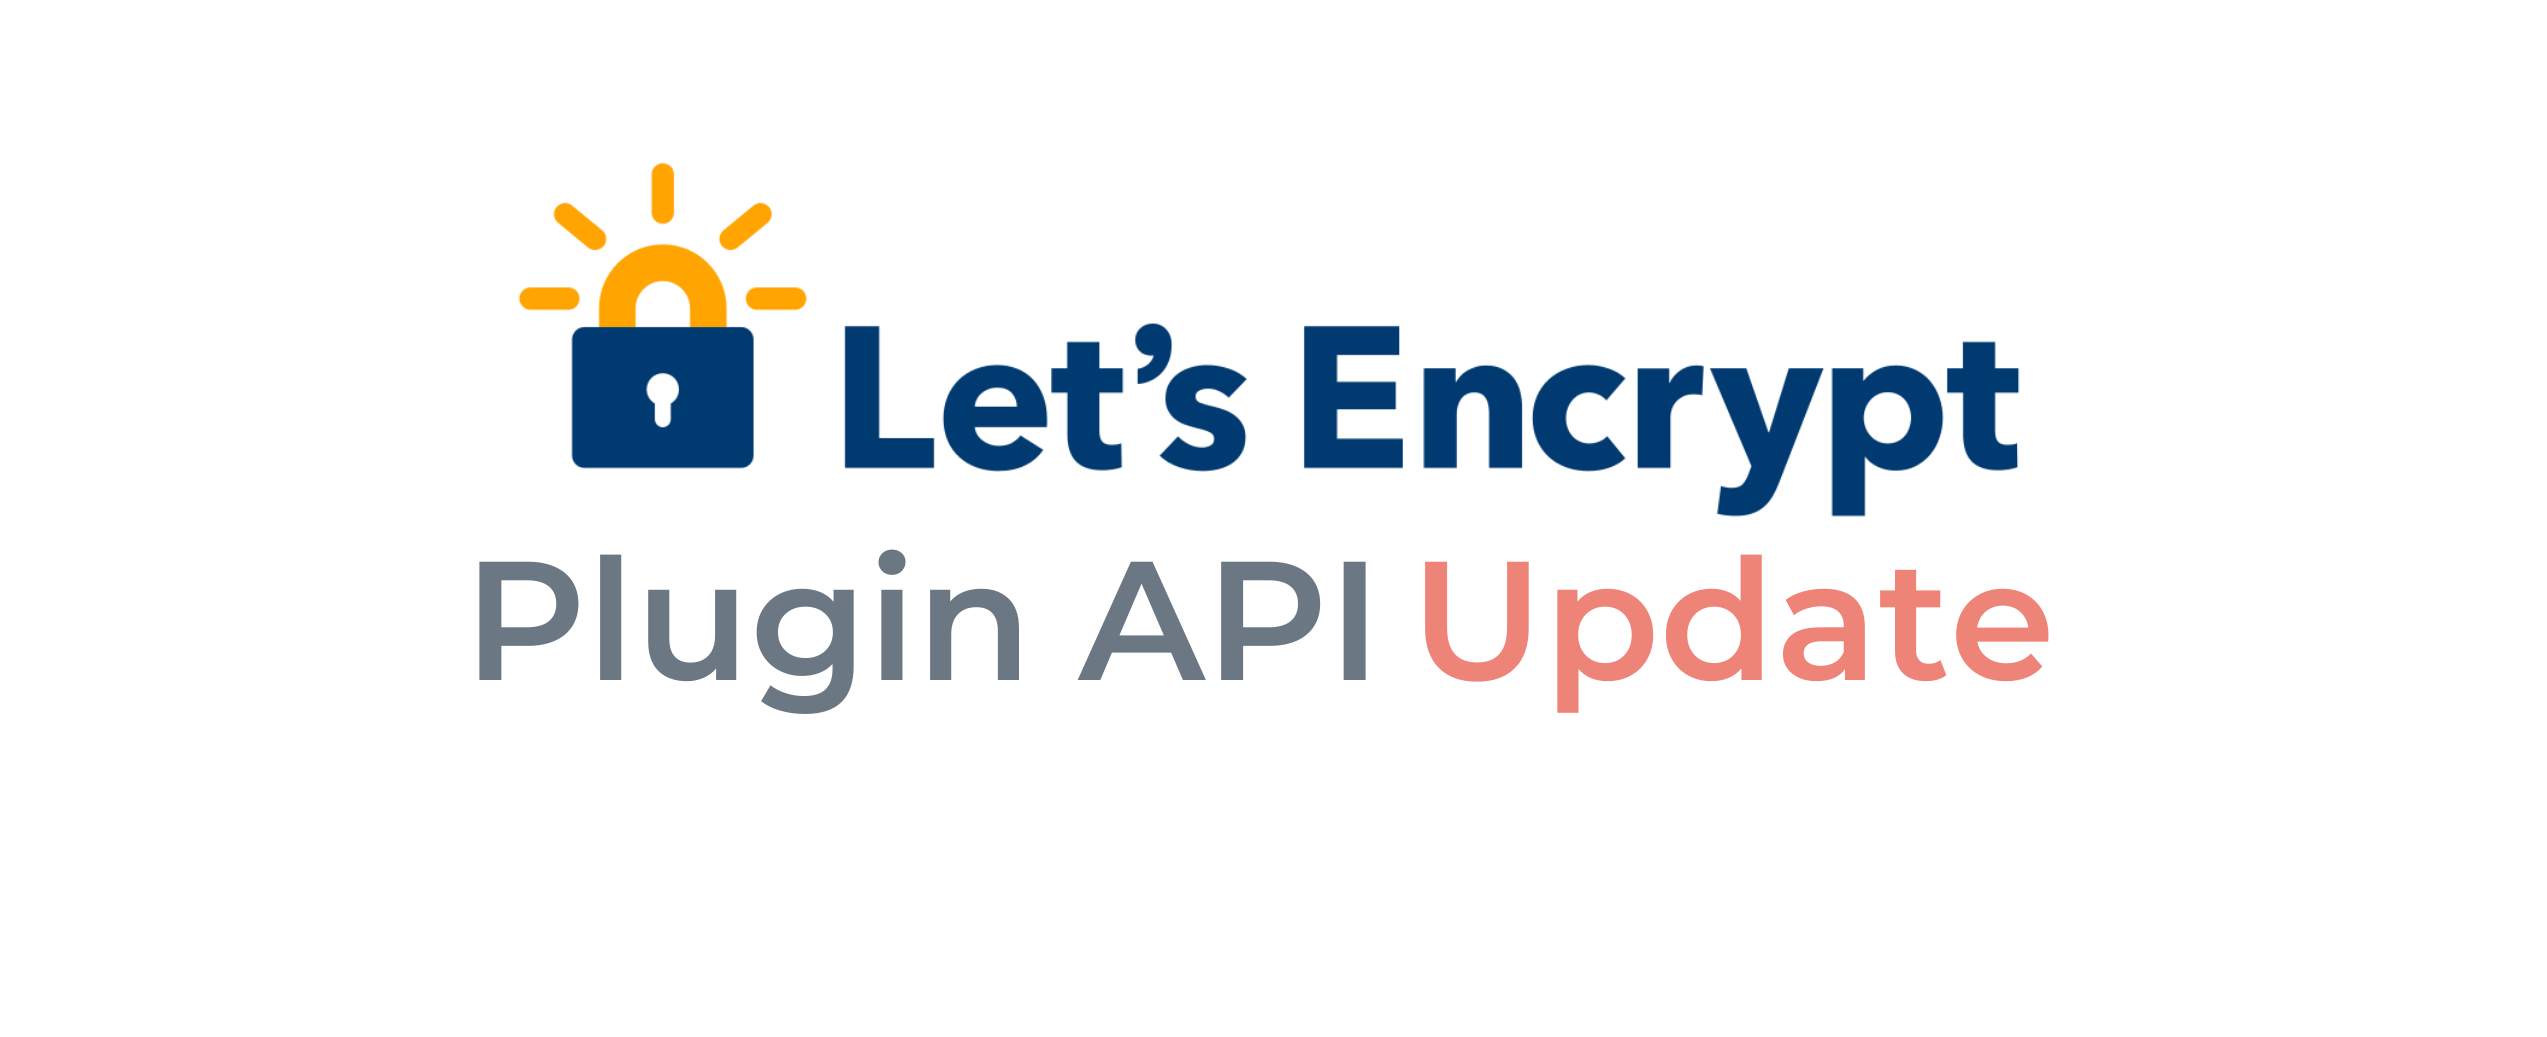 Let's Encrypt Update Blog! | cPanel Blog